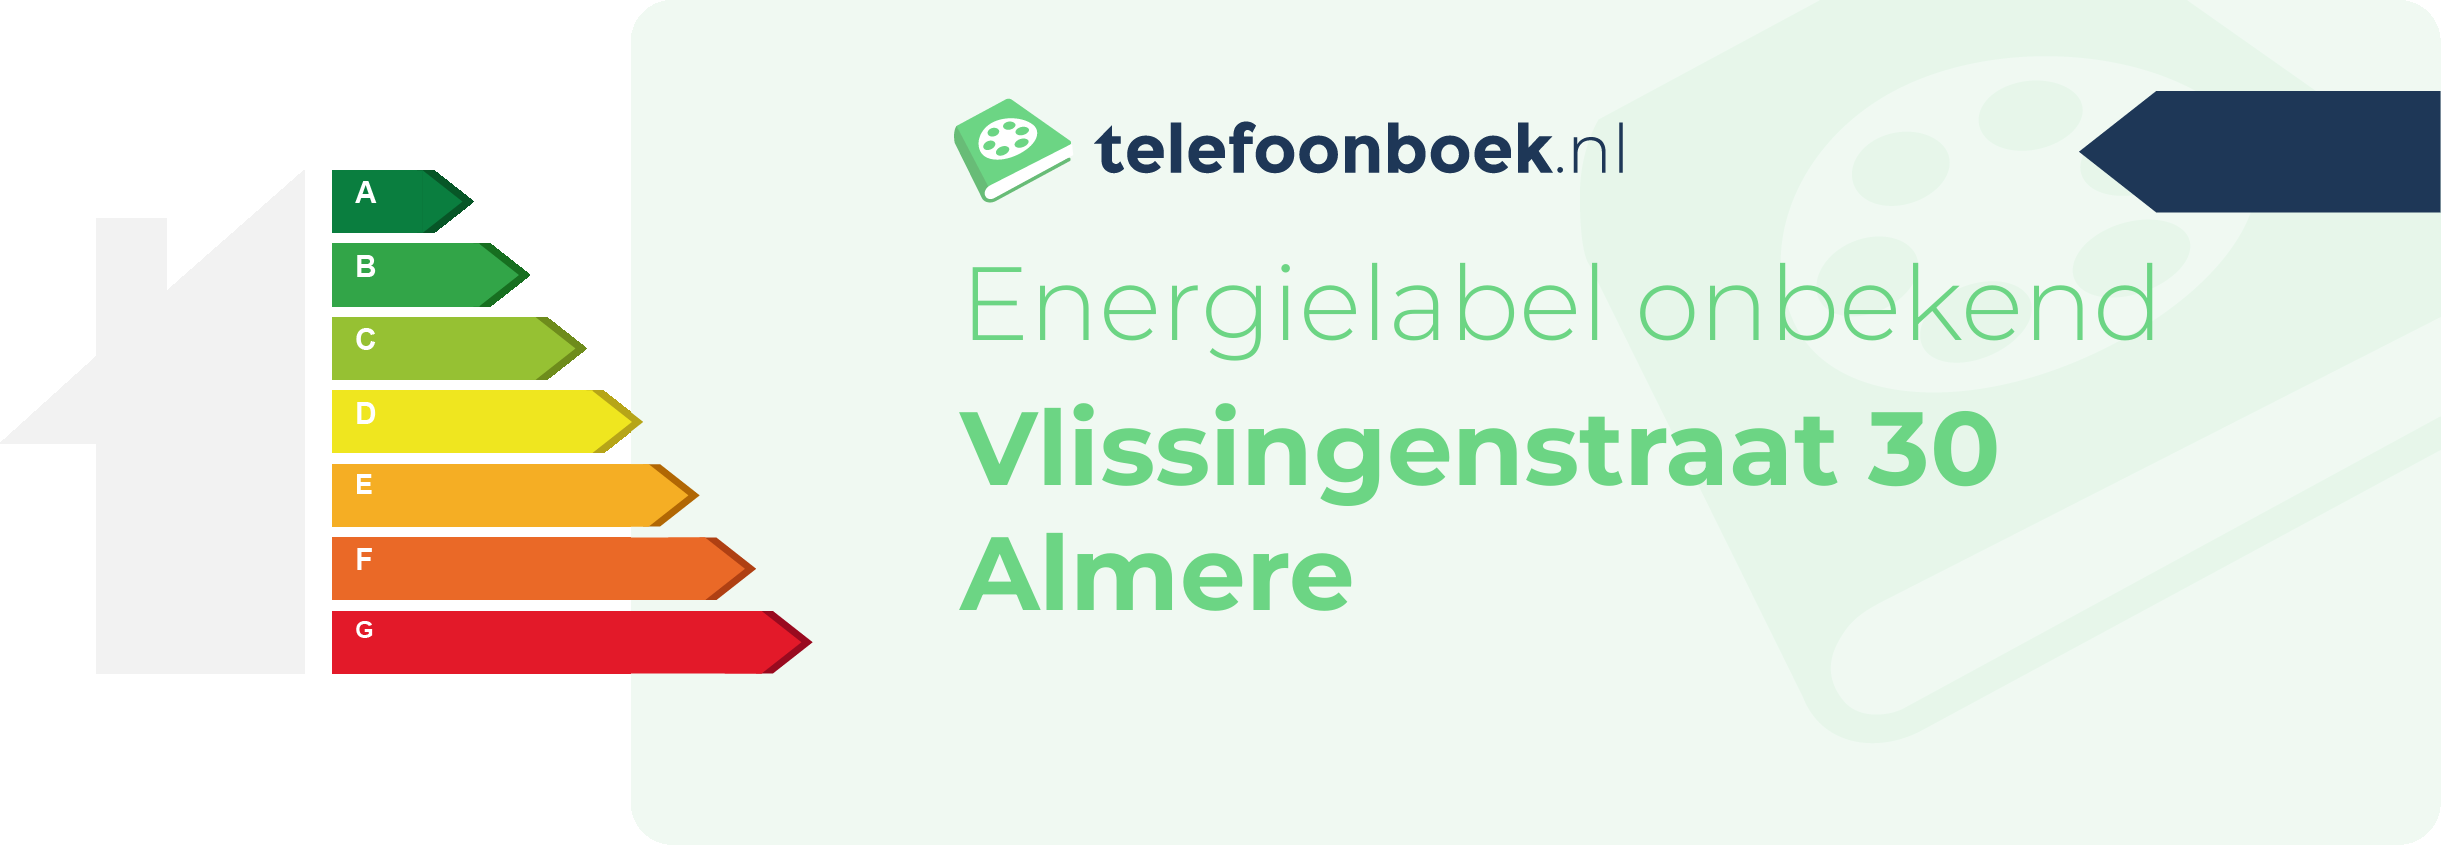 Energielabel Vlissingenstraat 30 Almere